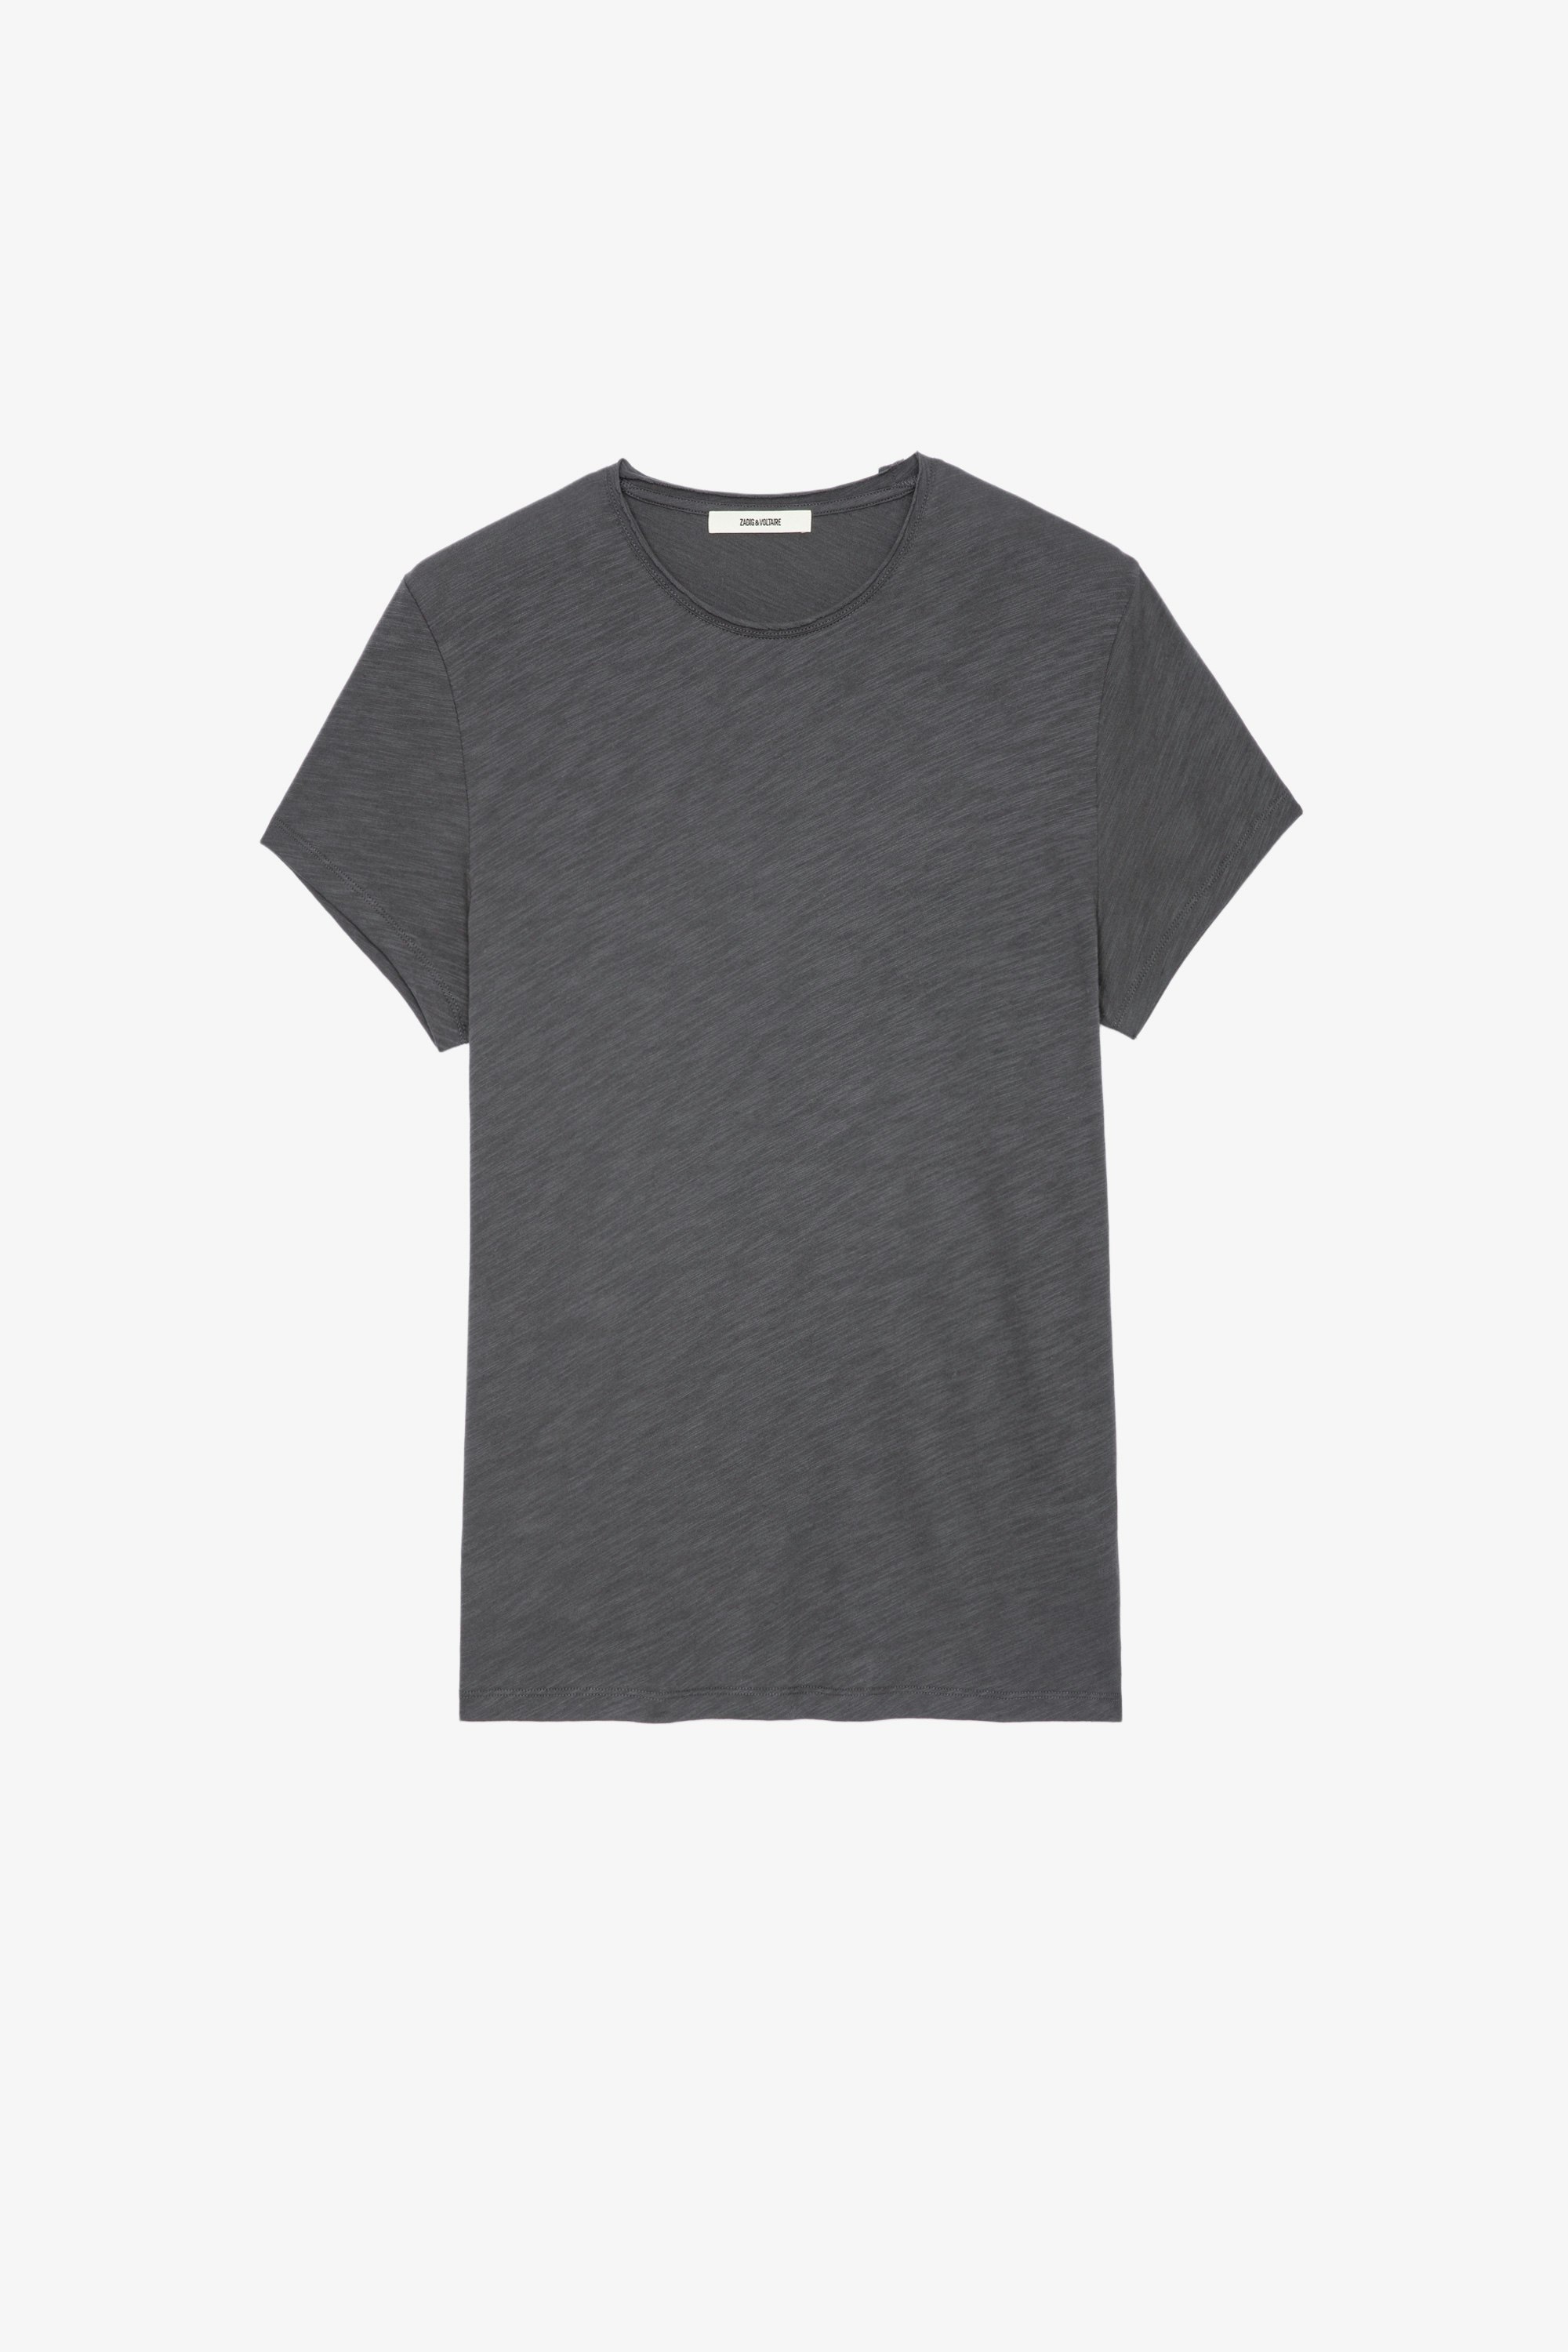 Toby Slub T-Shirt グレー フレイムドコットンTシャツ メンズ